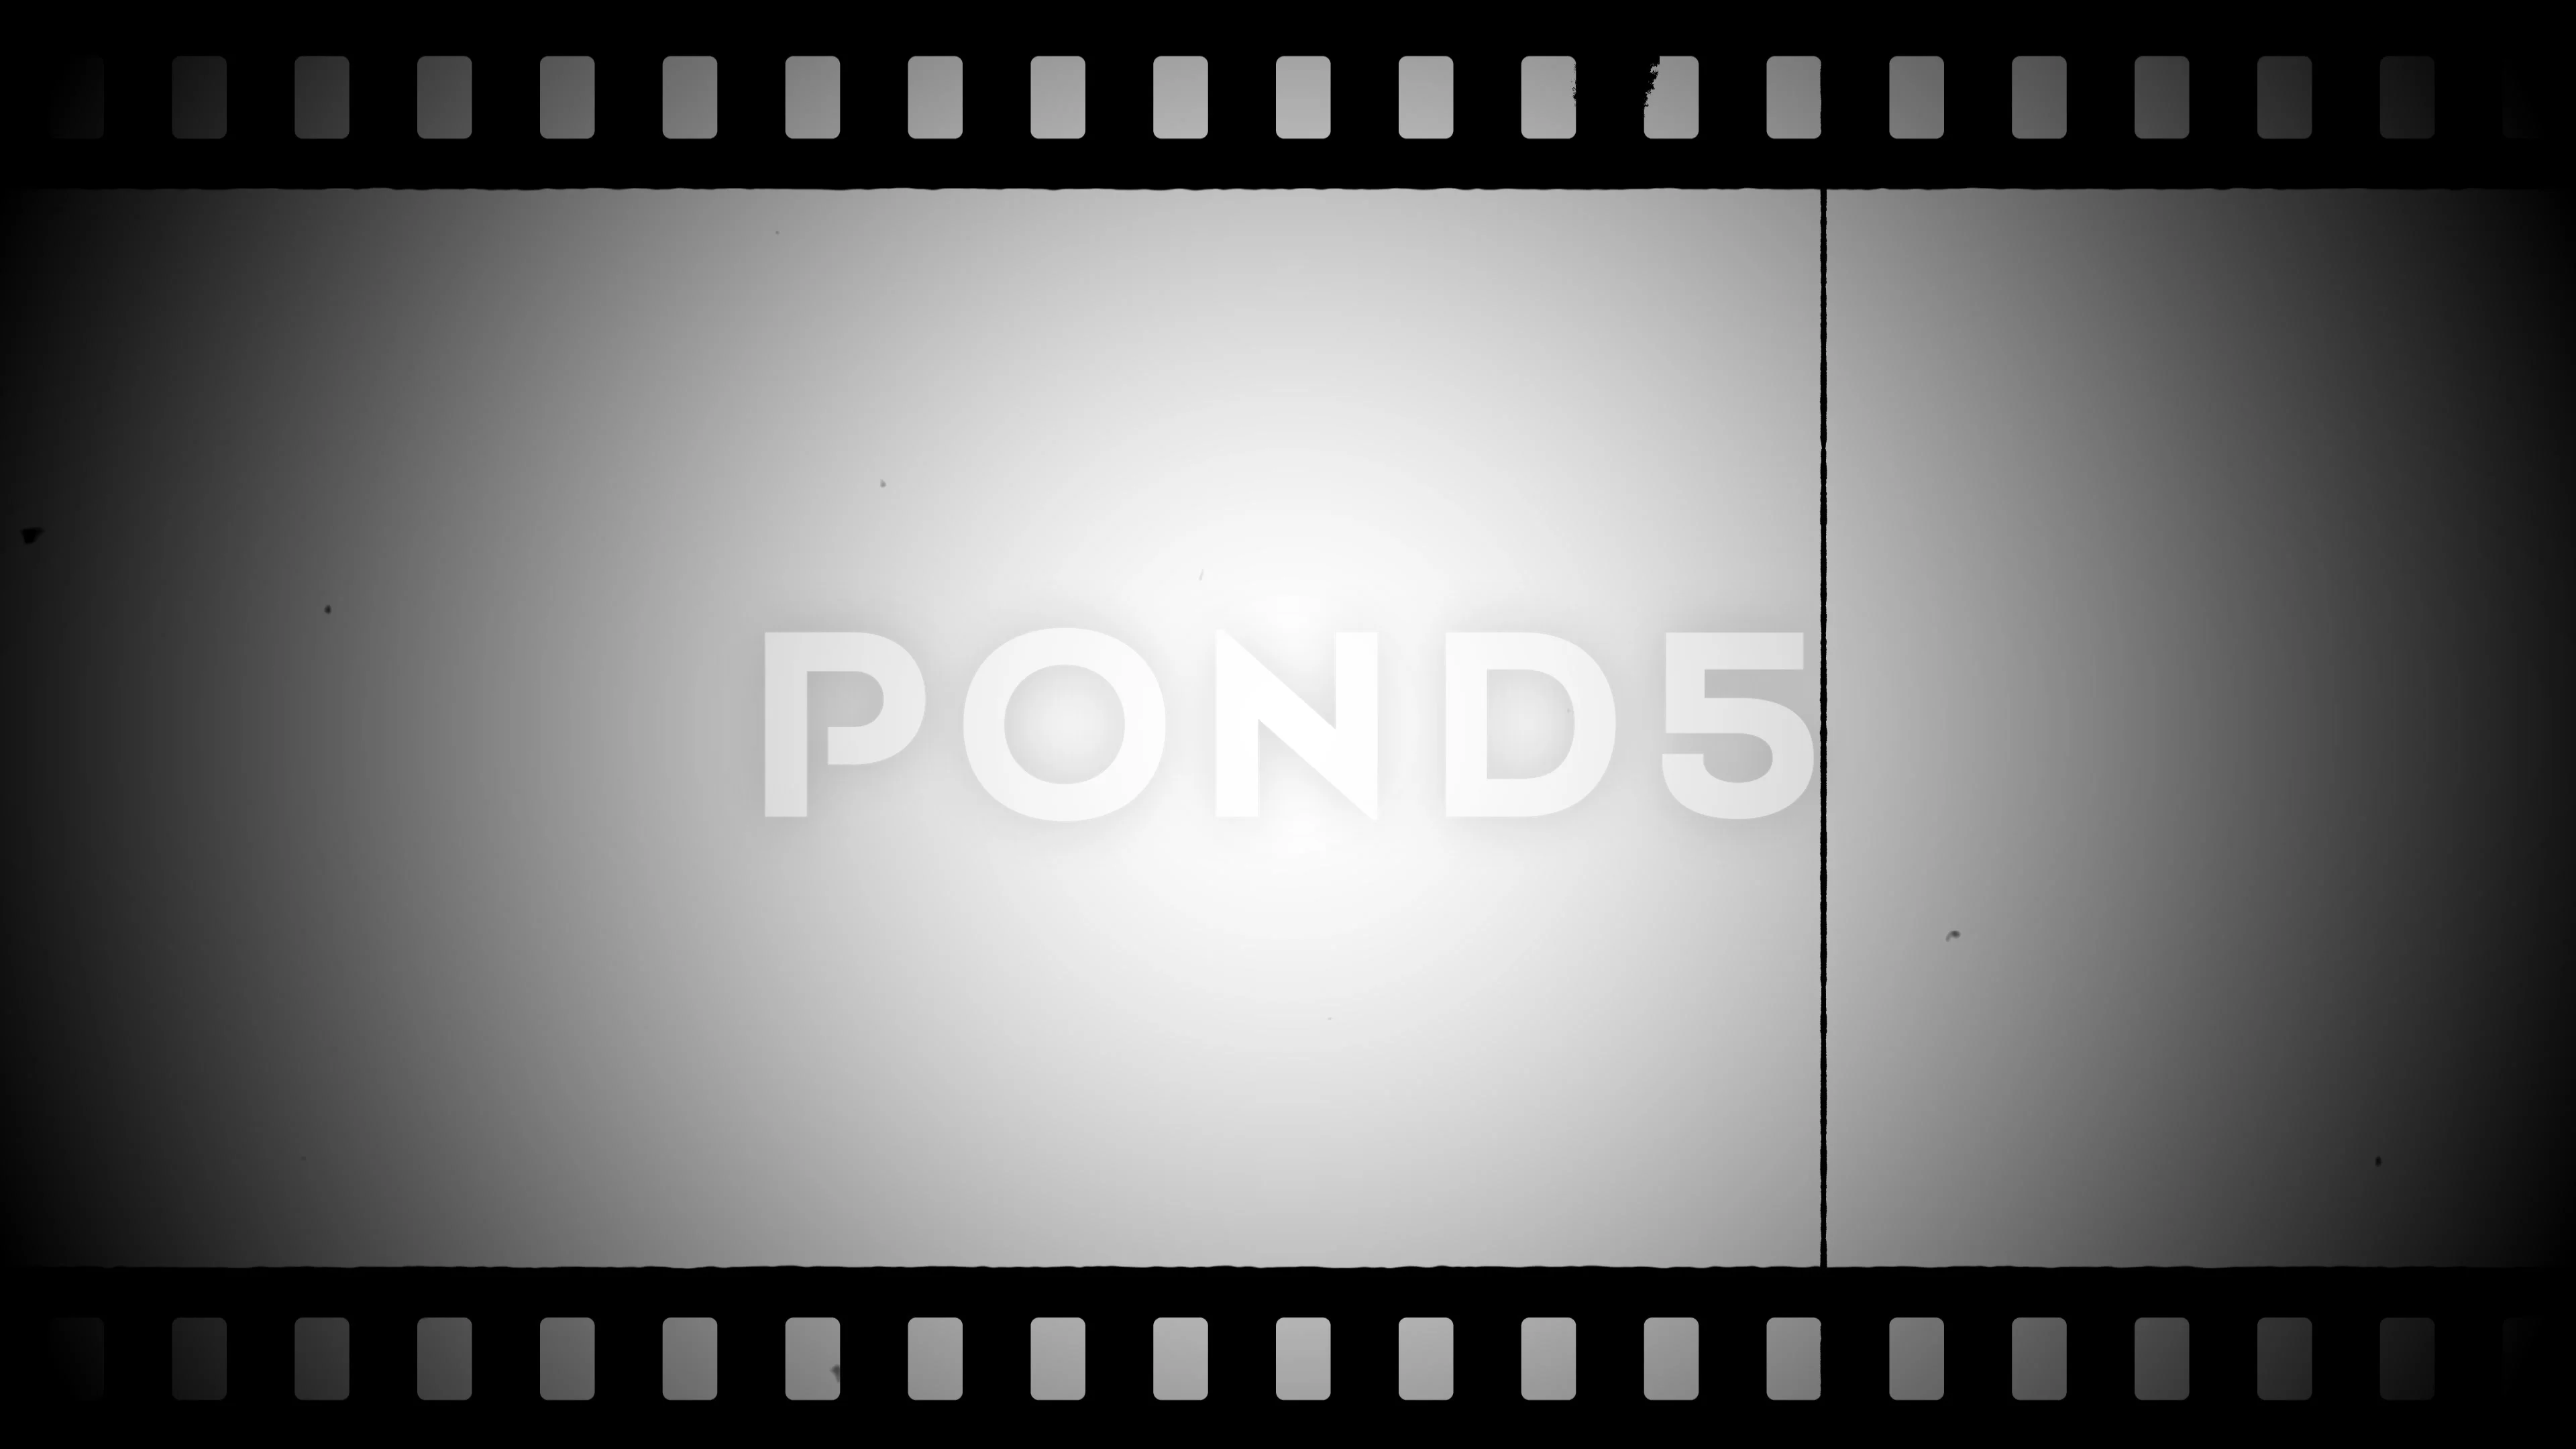 Super 8mm Film Strip Black and White Vid, Stock Video